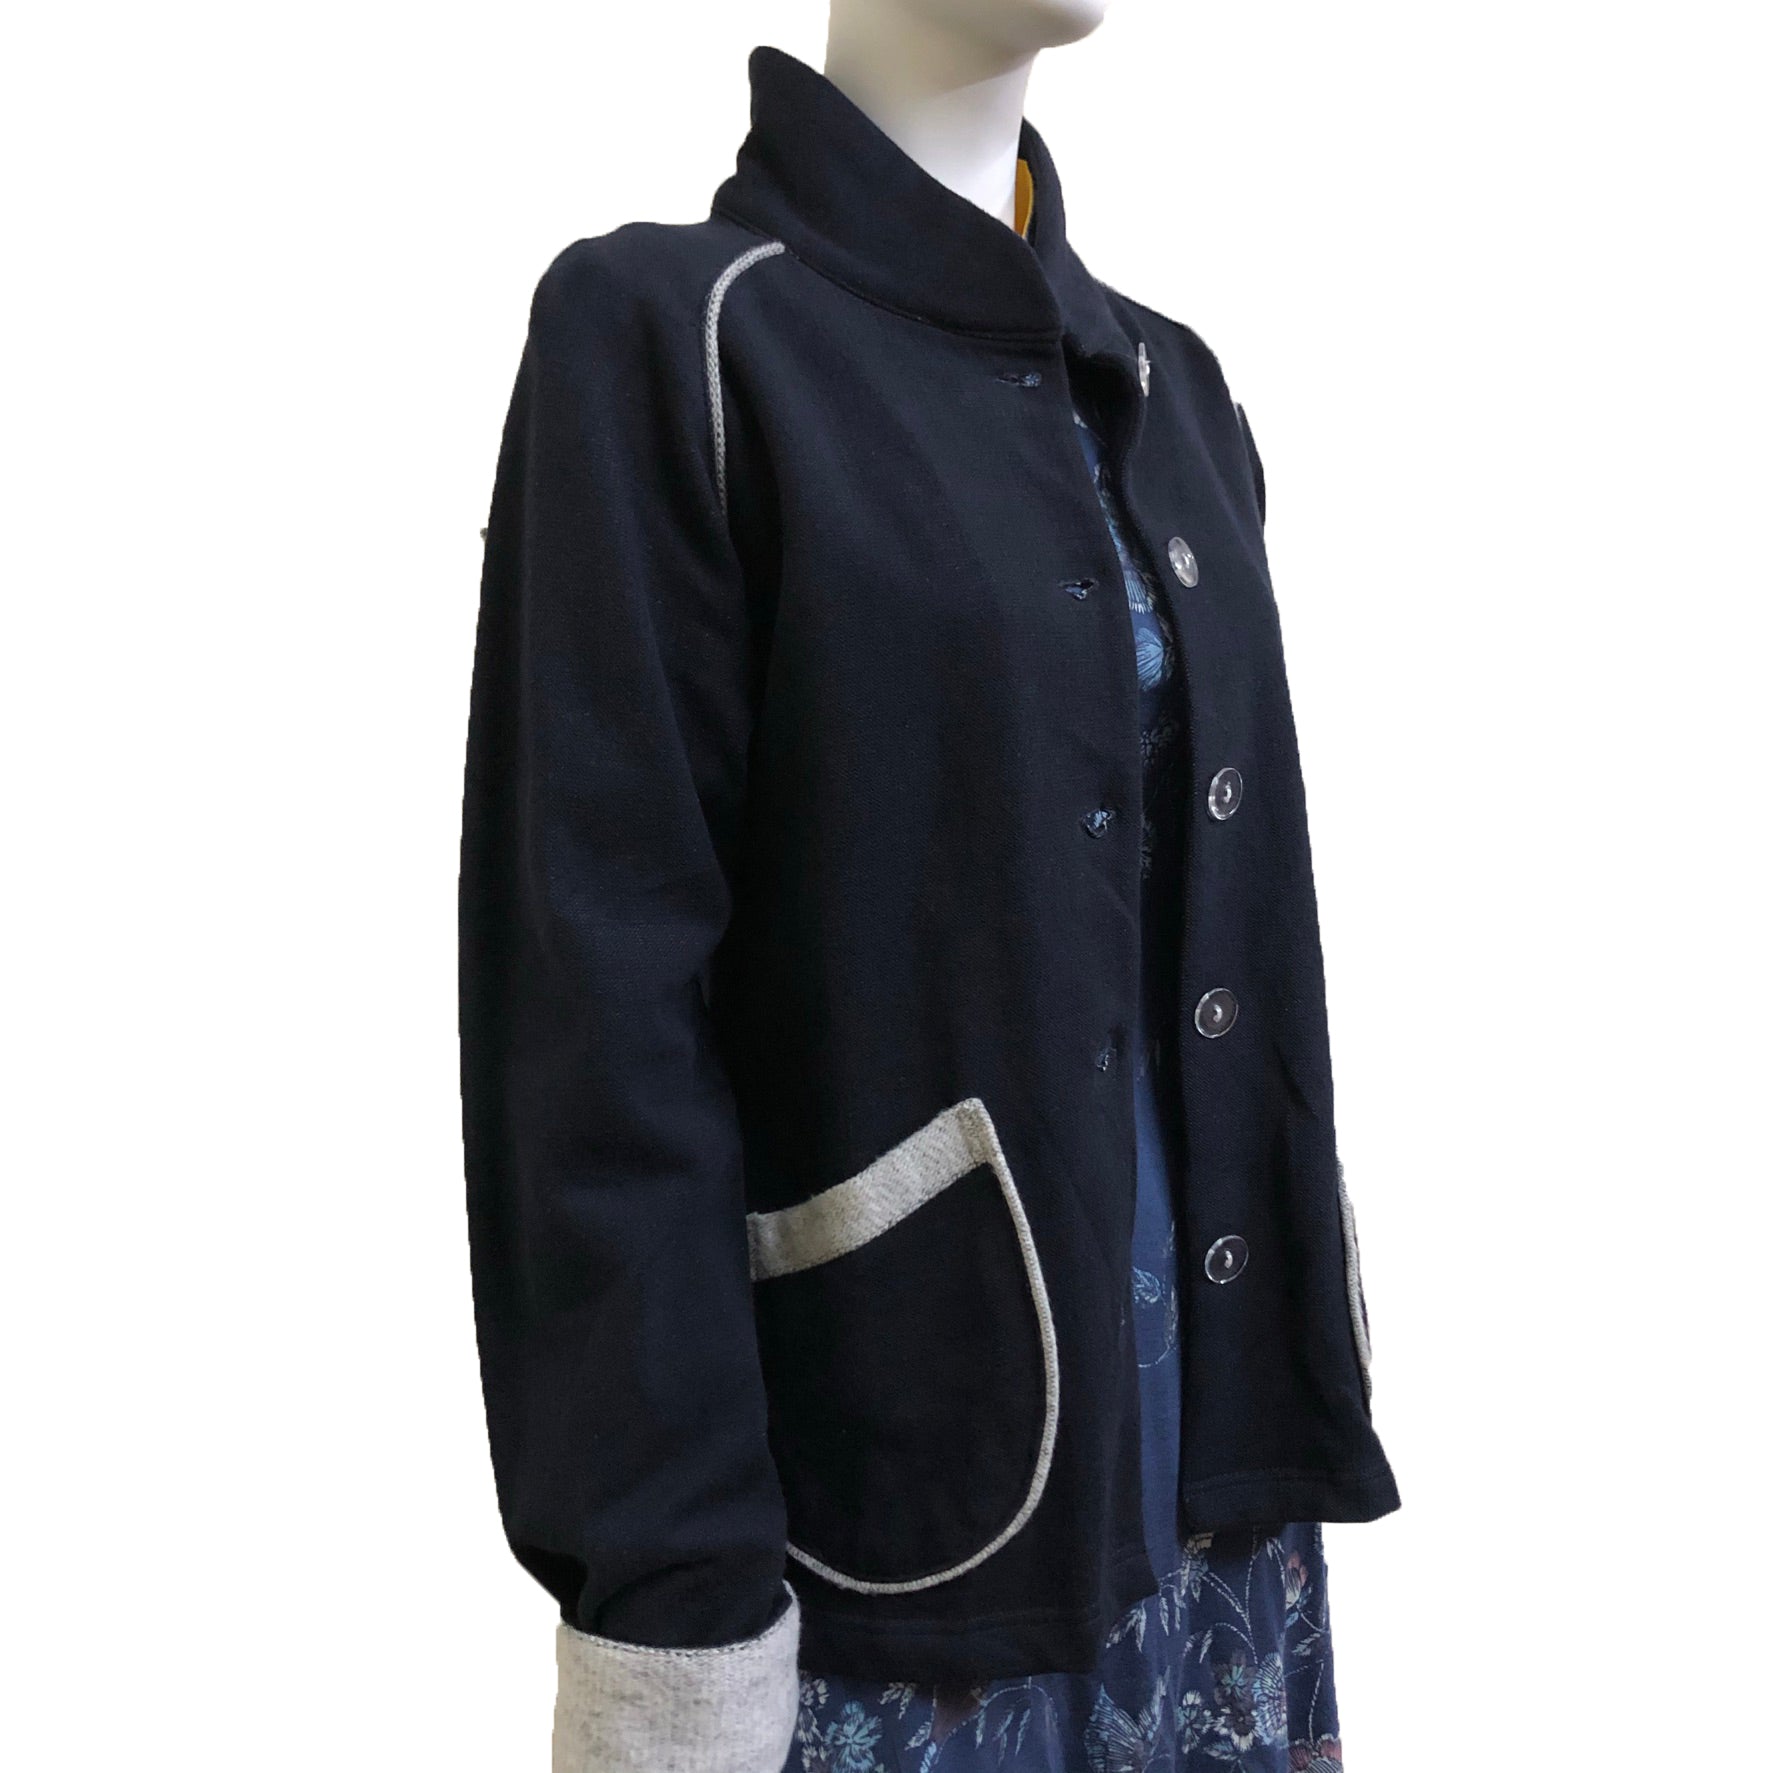 Chinese Collar Fleece Sung Jacket, Navy